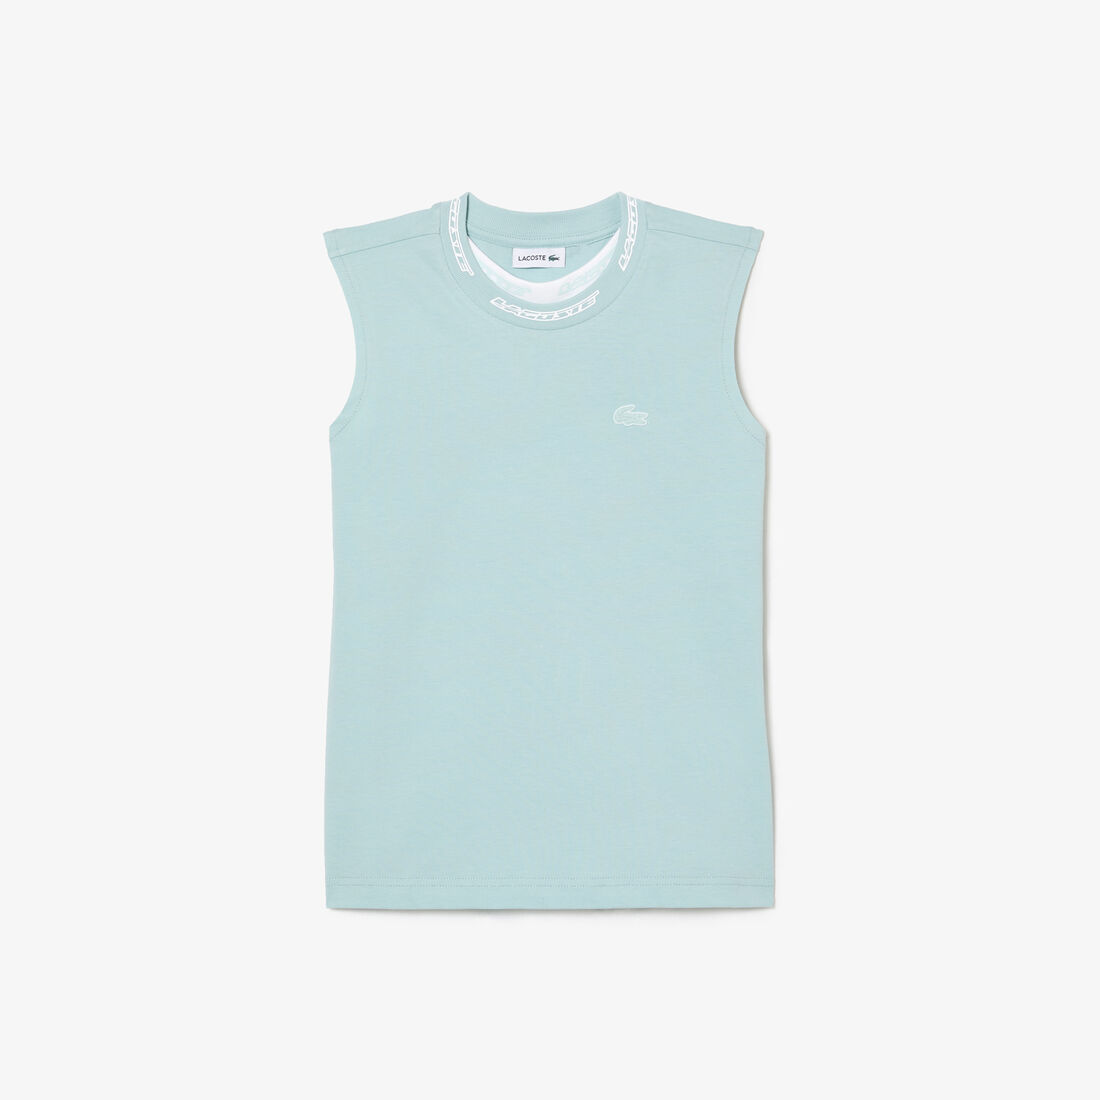 Girls’ Lacoste Cotton Jersey Sleeveless T-shirt